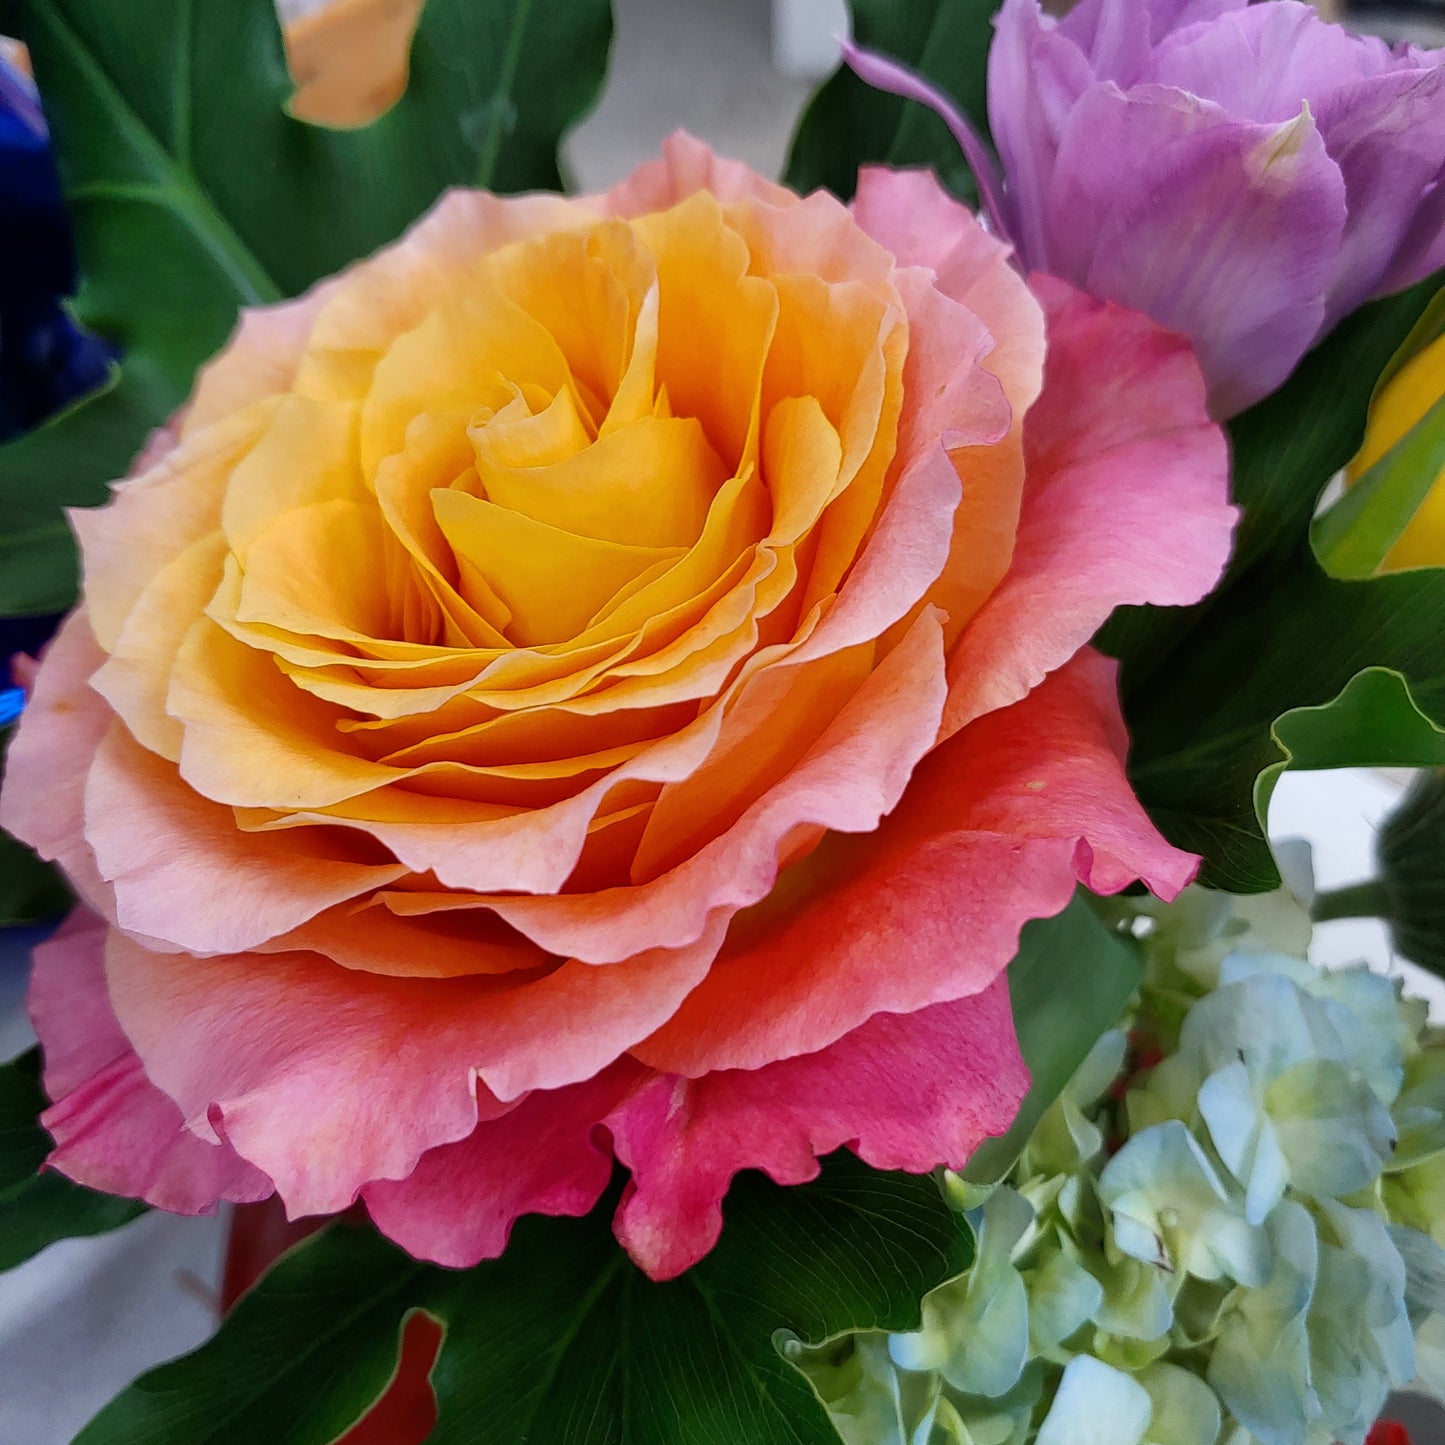 2 DOZEN Premium Colored Roses or Mixed Colored Roses